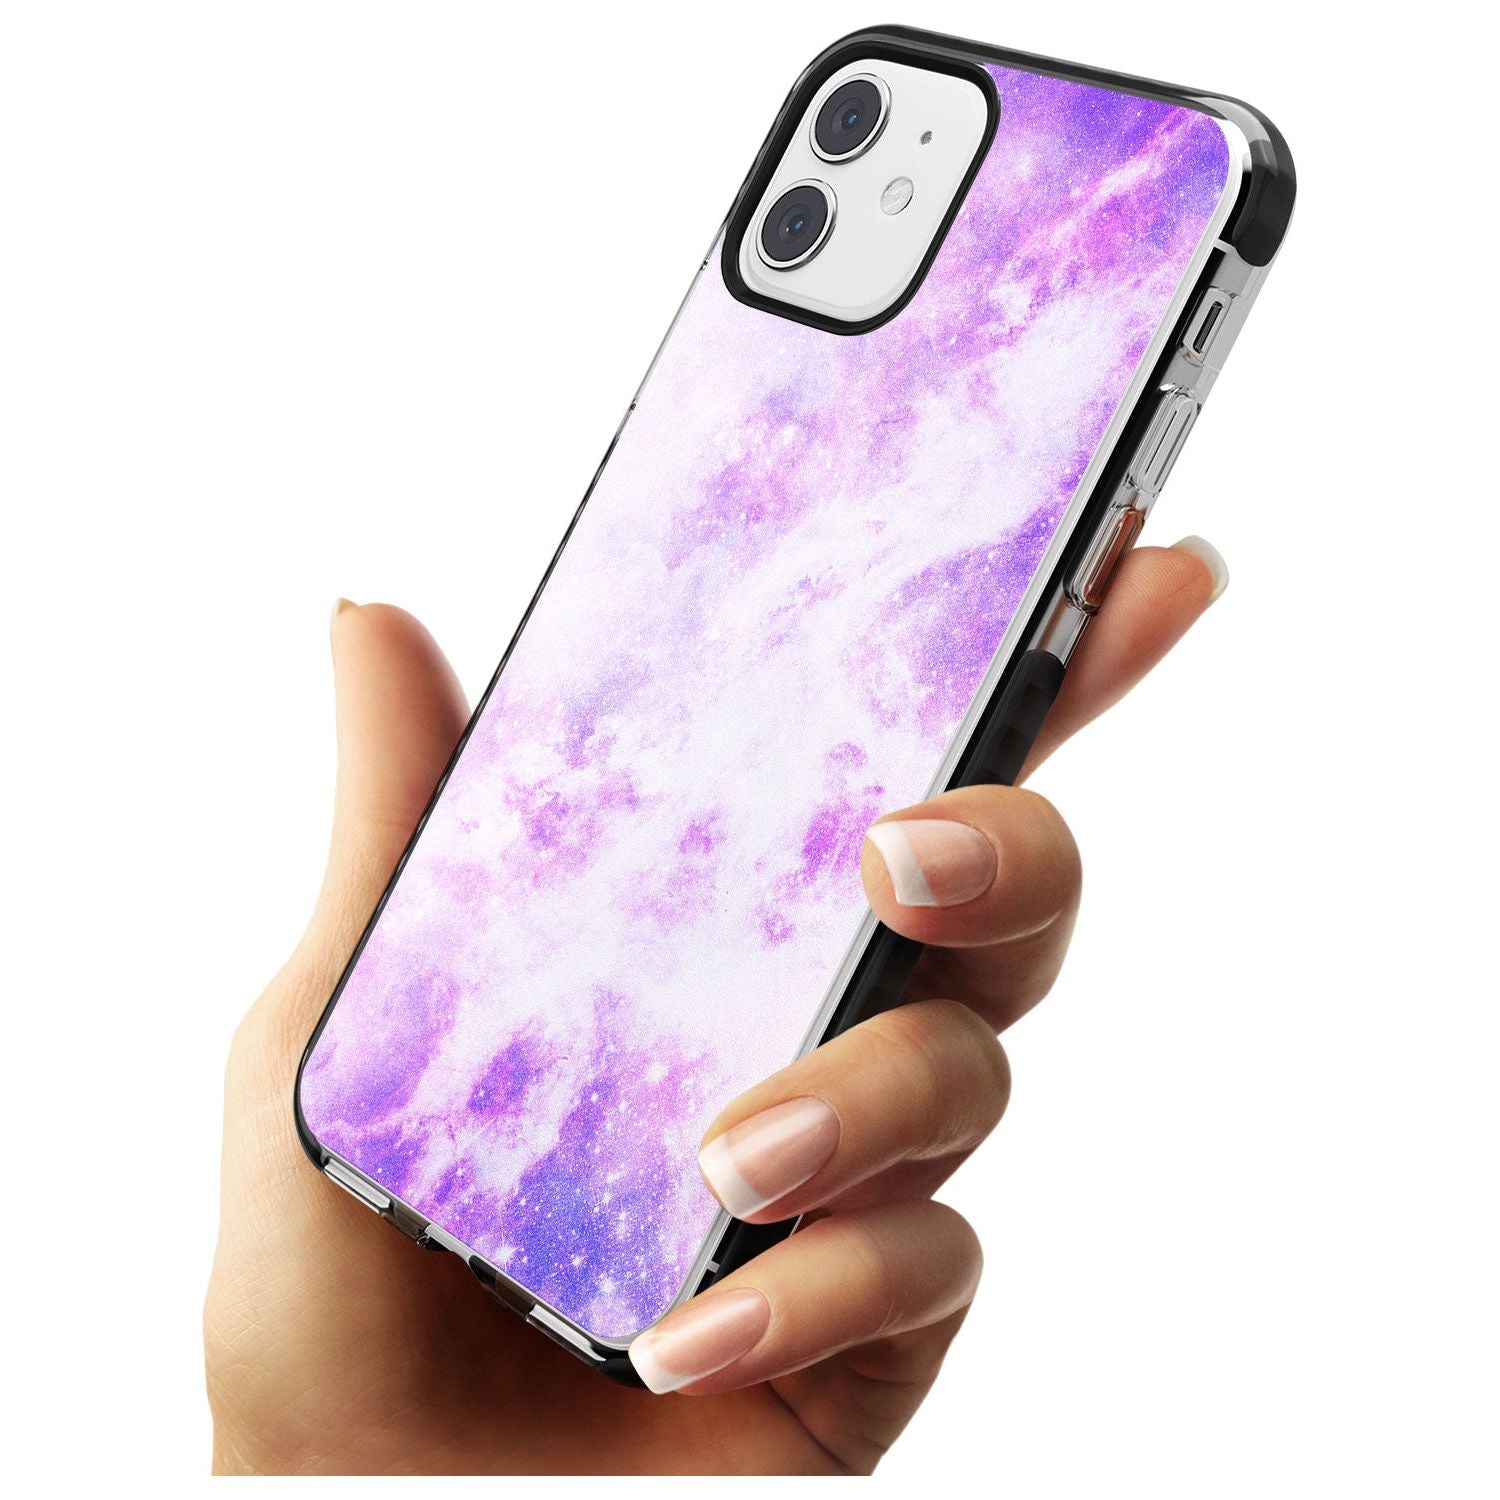 Purple Galaxy Pattern Design Black Impact Phone Case for iPhone 11